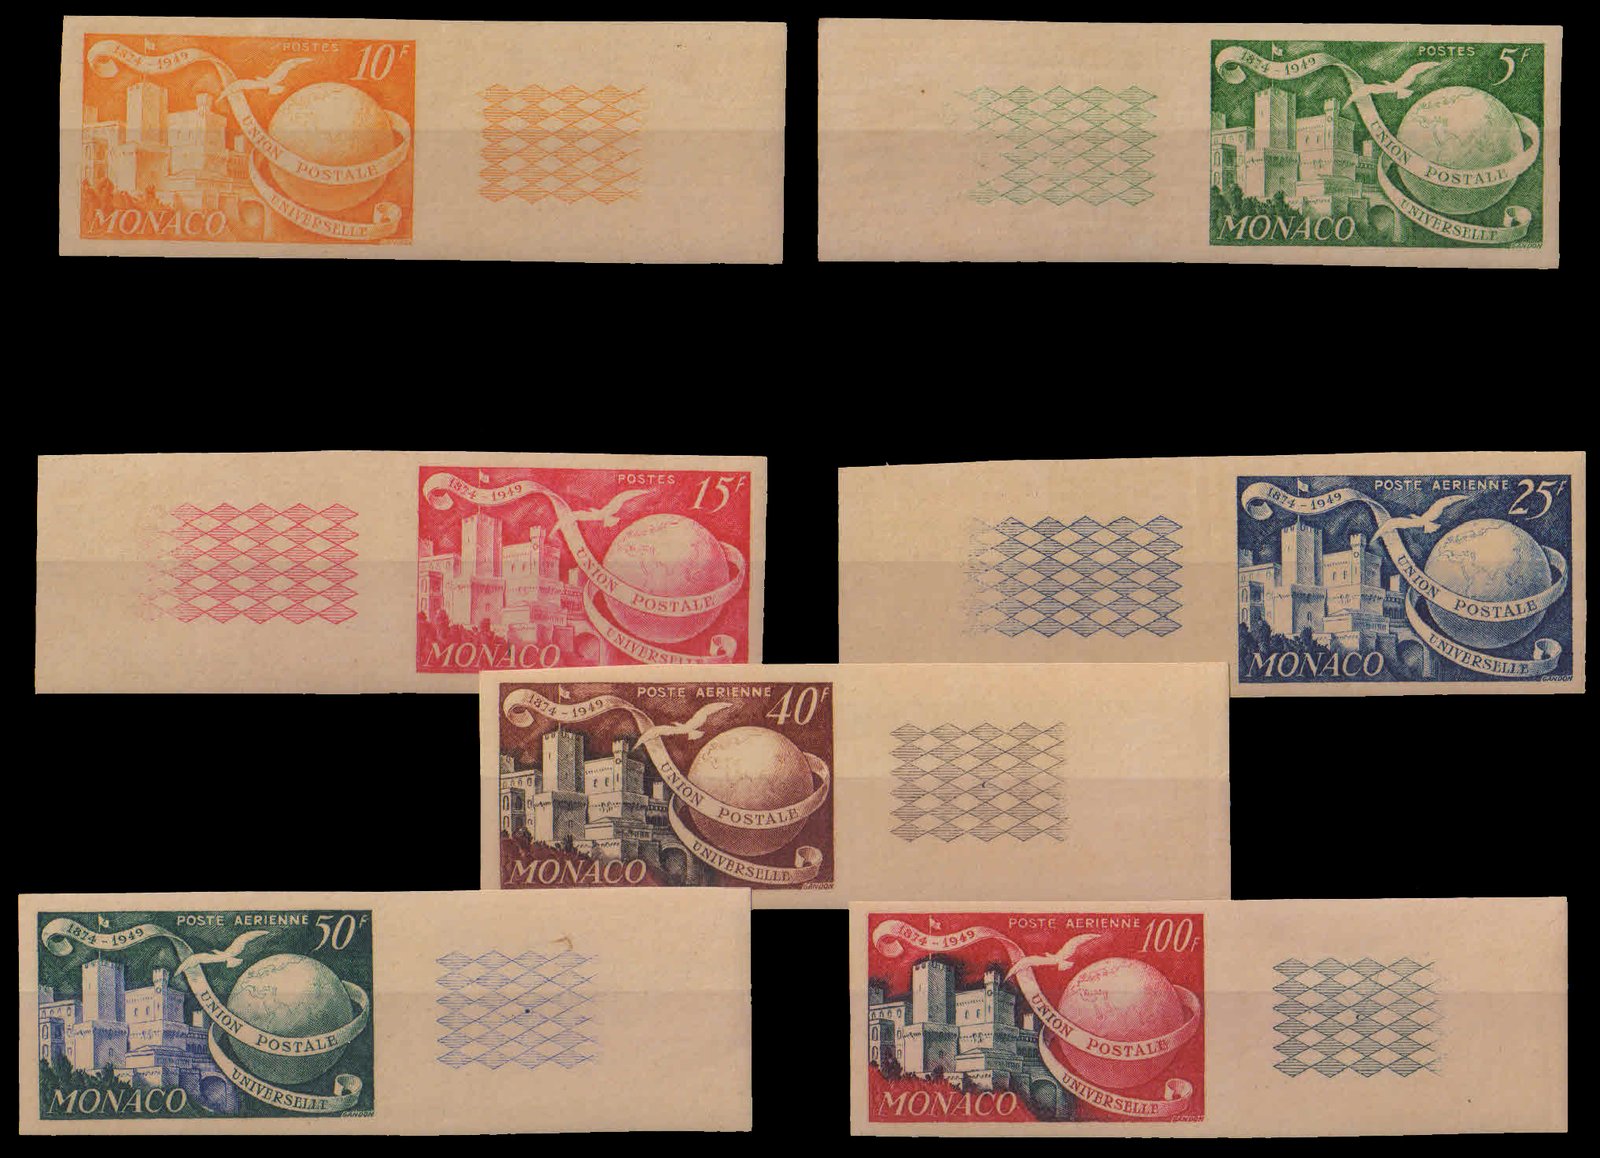 MONACO 1949-U.P.U. Imperf Set of 7, stamp with side Margin, Mint Lightly Hinged